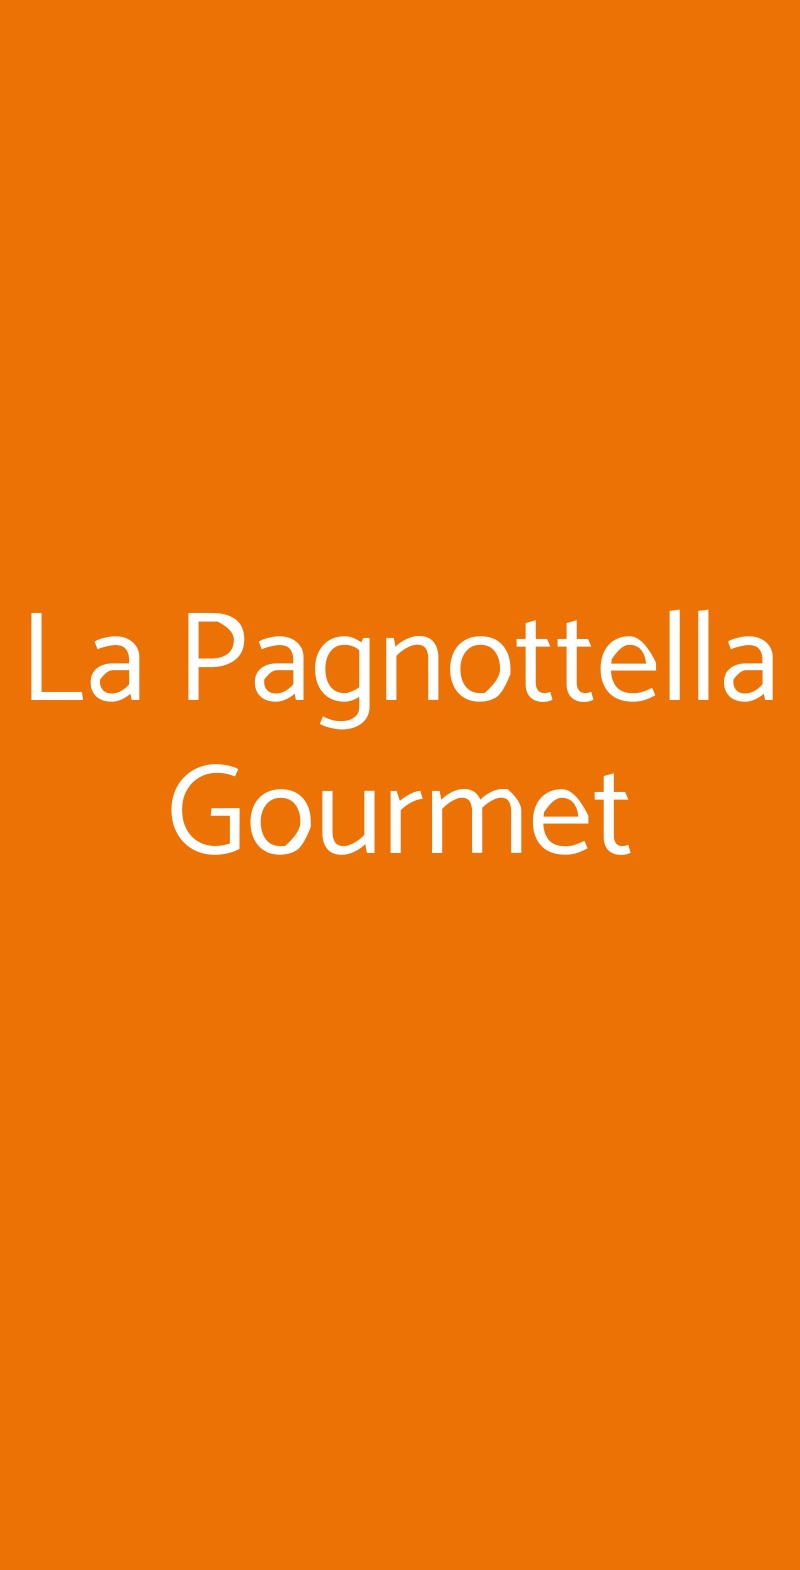 La Pagnottella Gourmet Roma menù 1 pagina